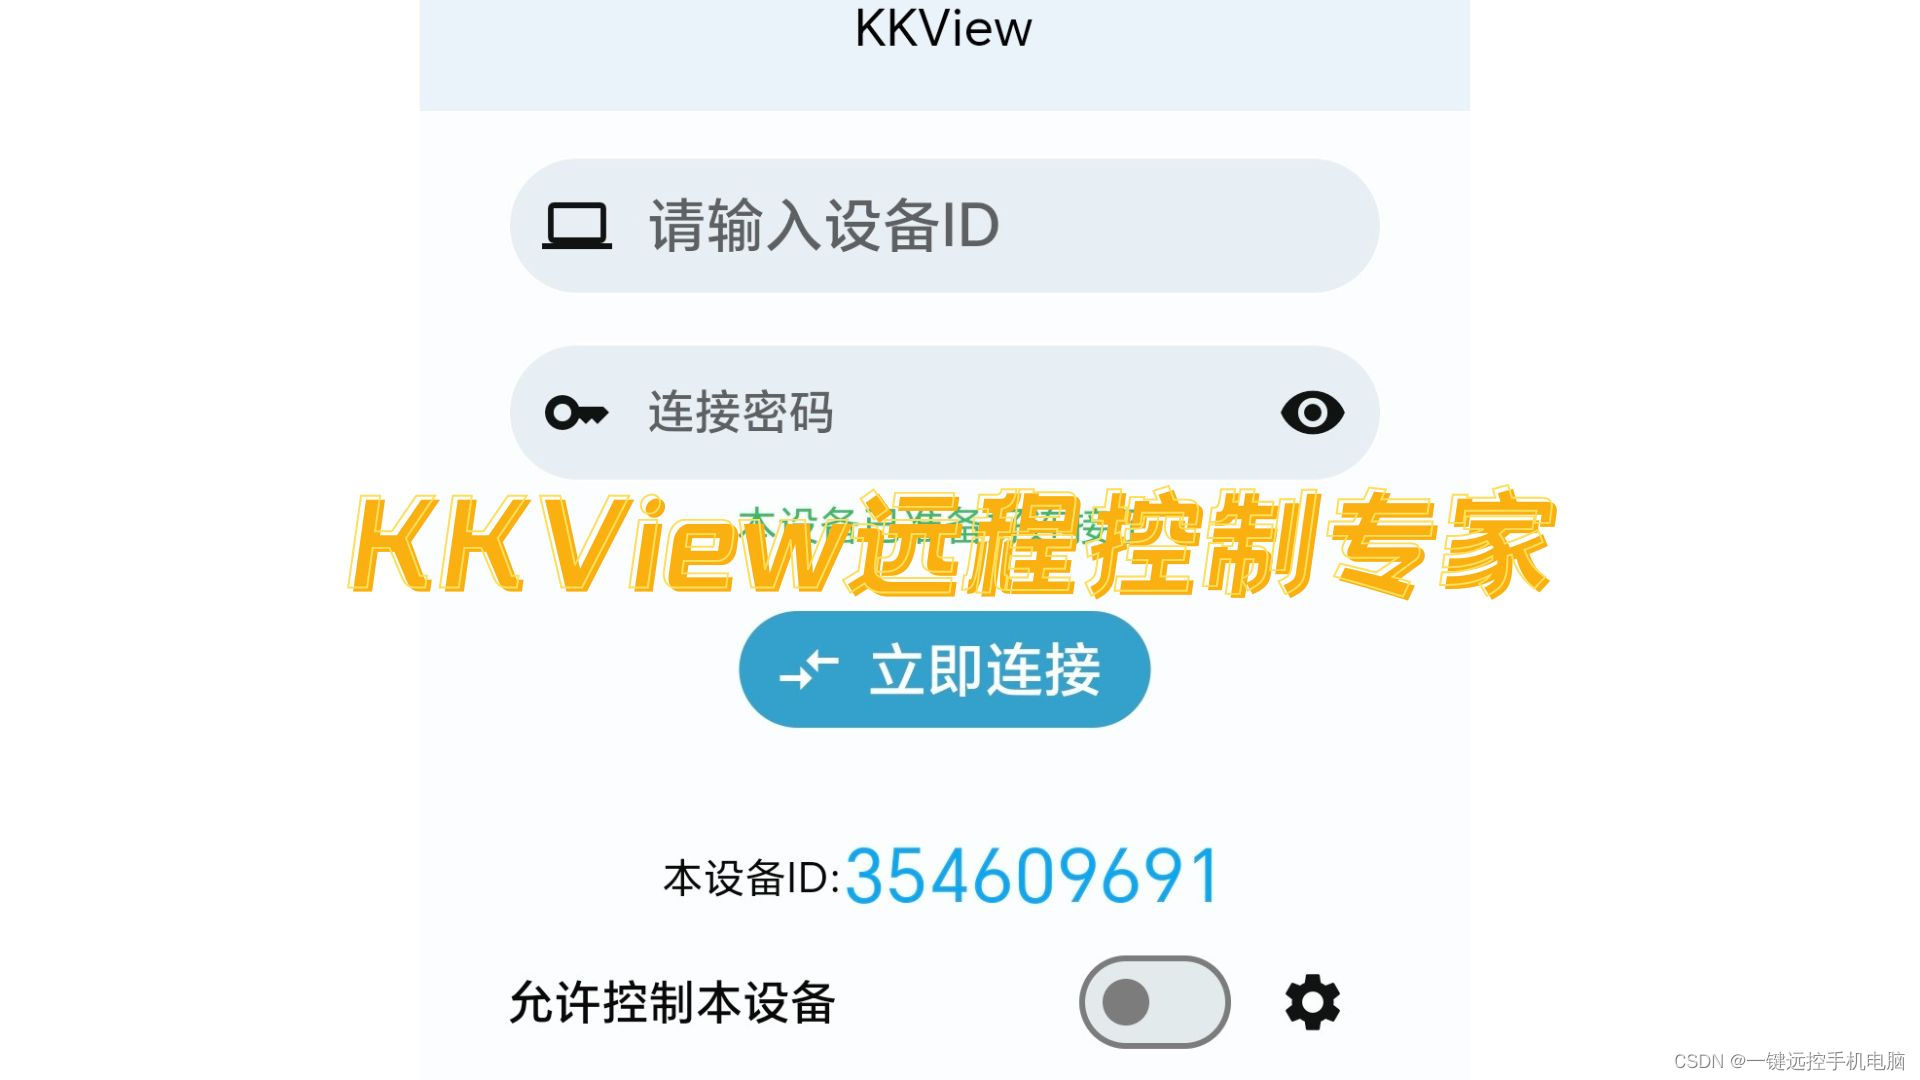 KKView远程控制2.0版本发布，TeamViewer面临巨大挑战